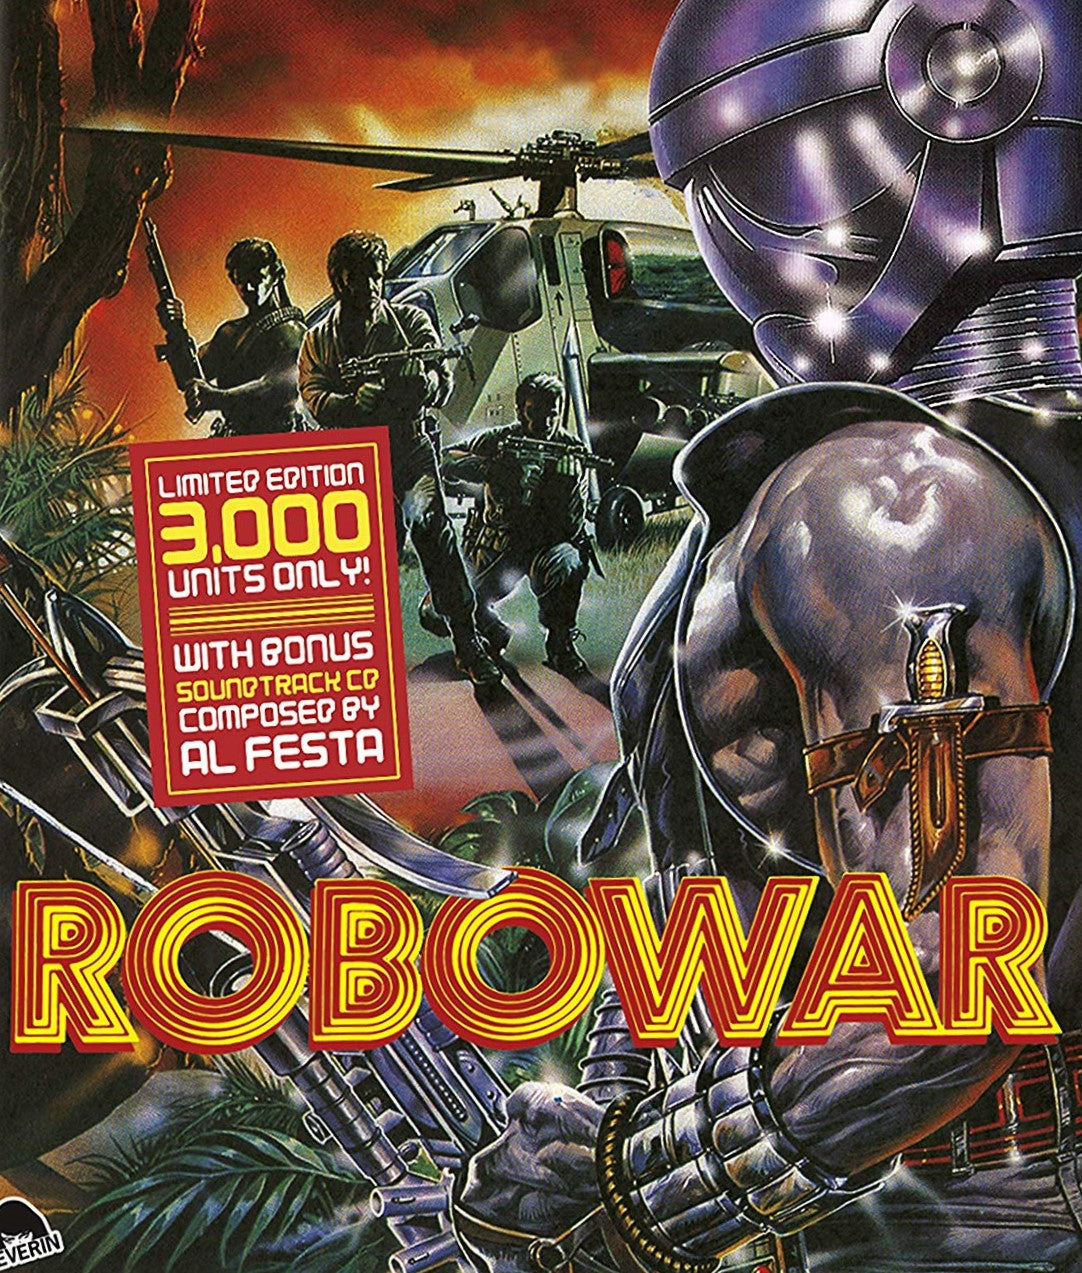 Robowar (Limited Edition) Blu-Ray/cd Blu-Ray